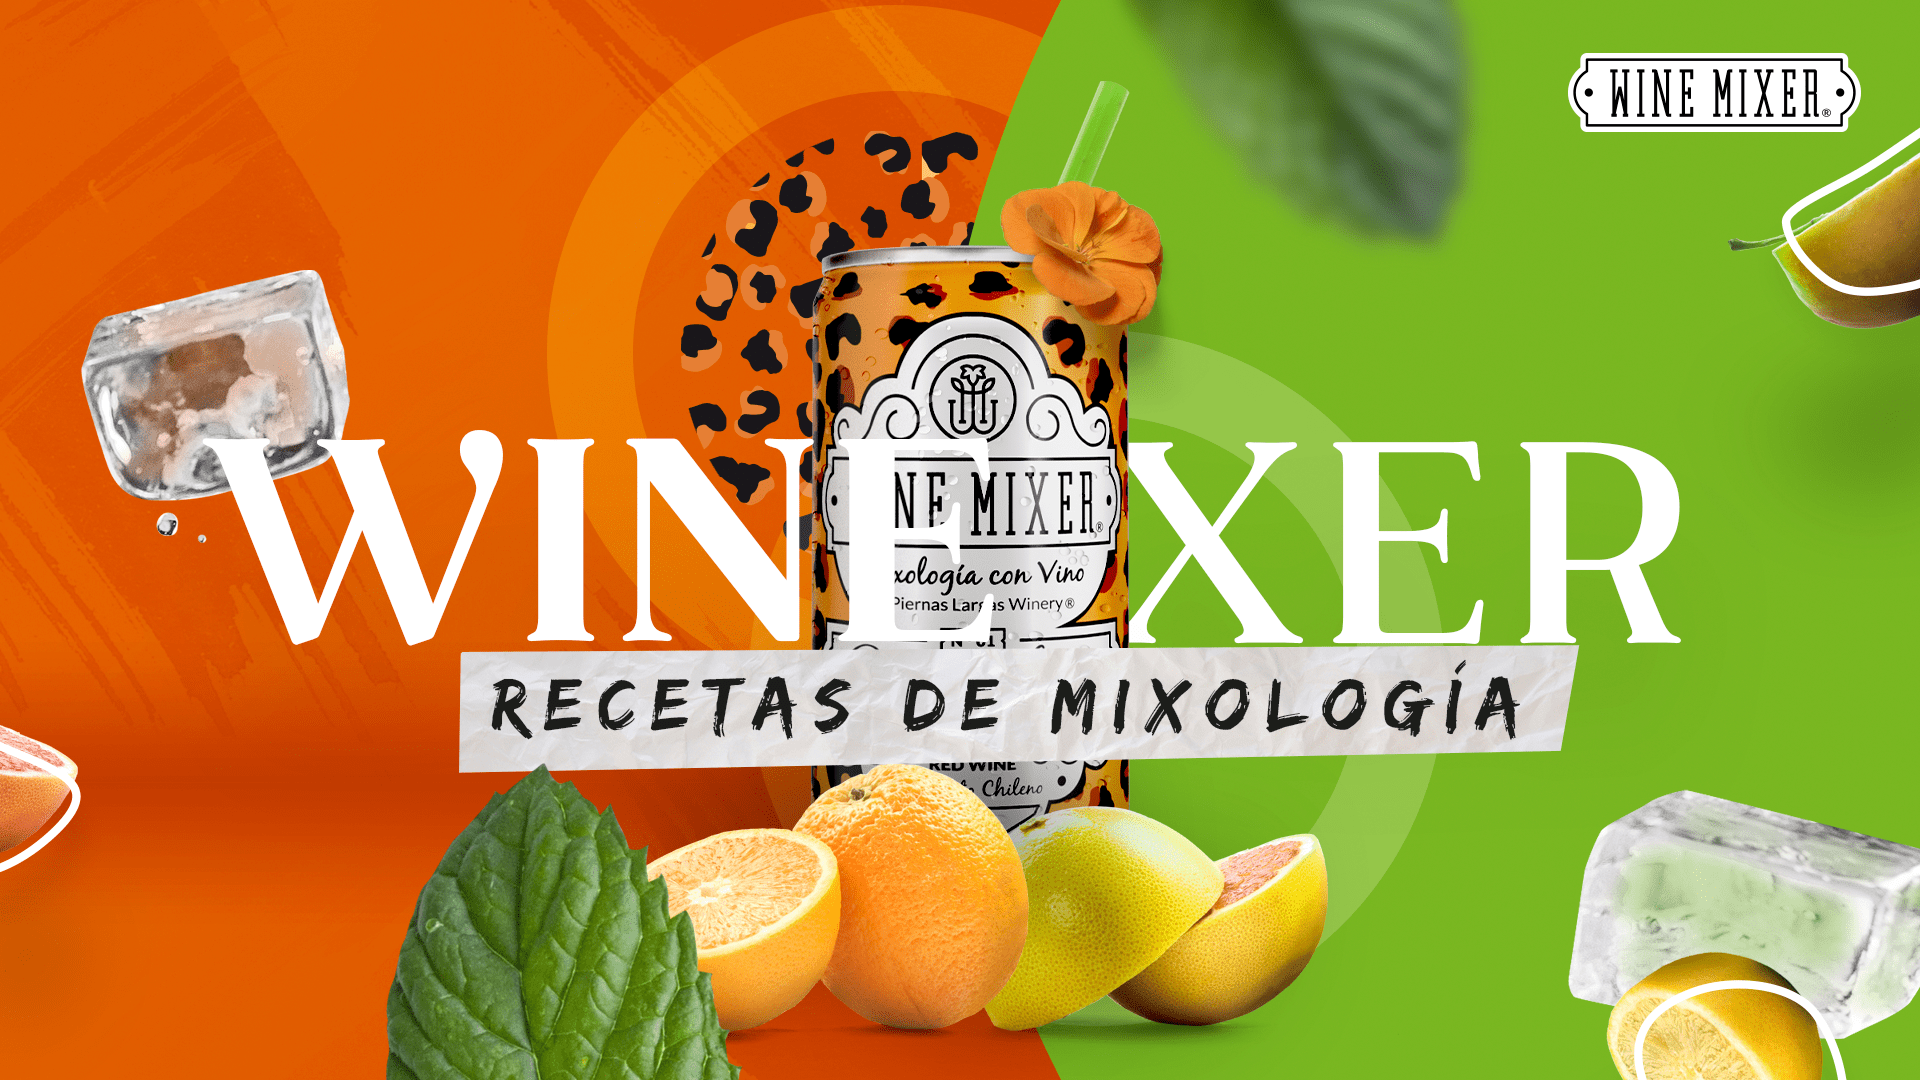 wine mixer mixologia con vino